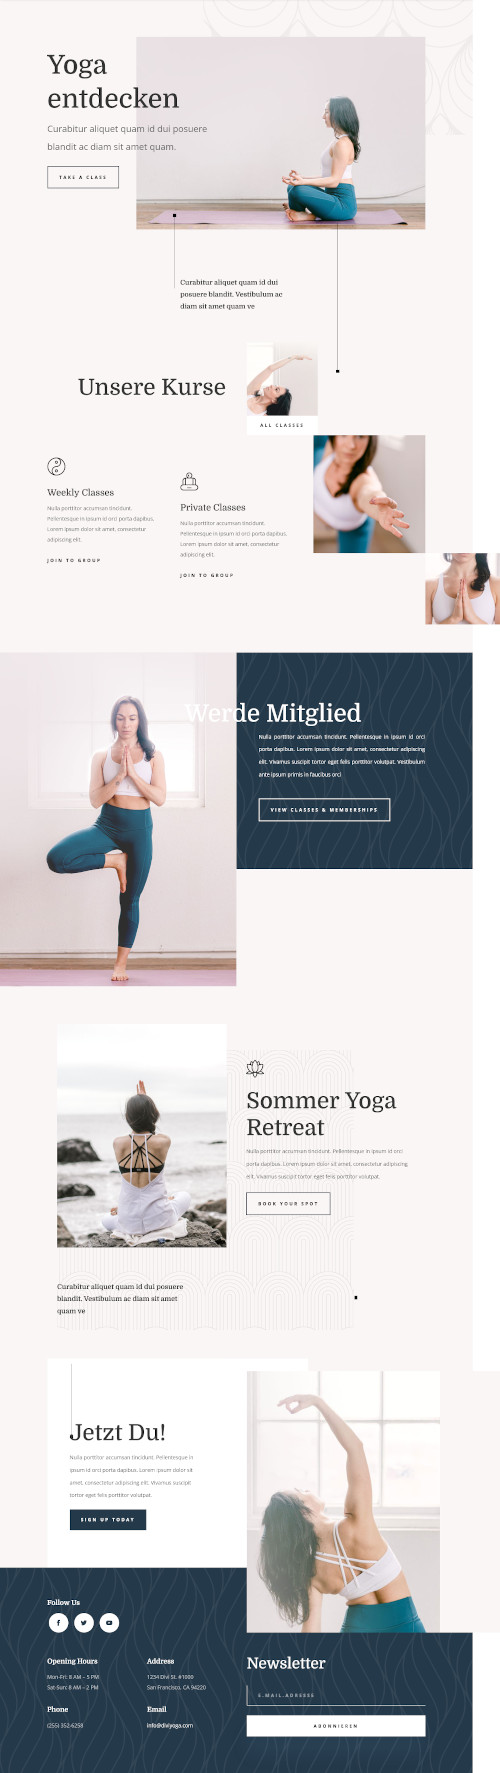 Website Beispiel Yoga